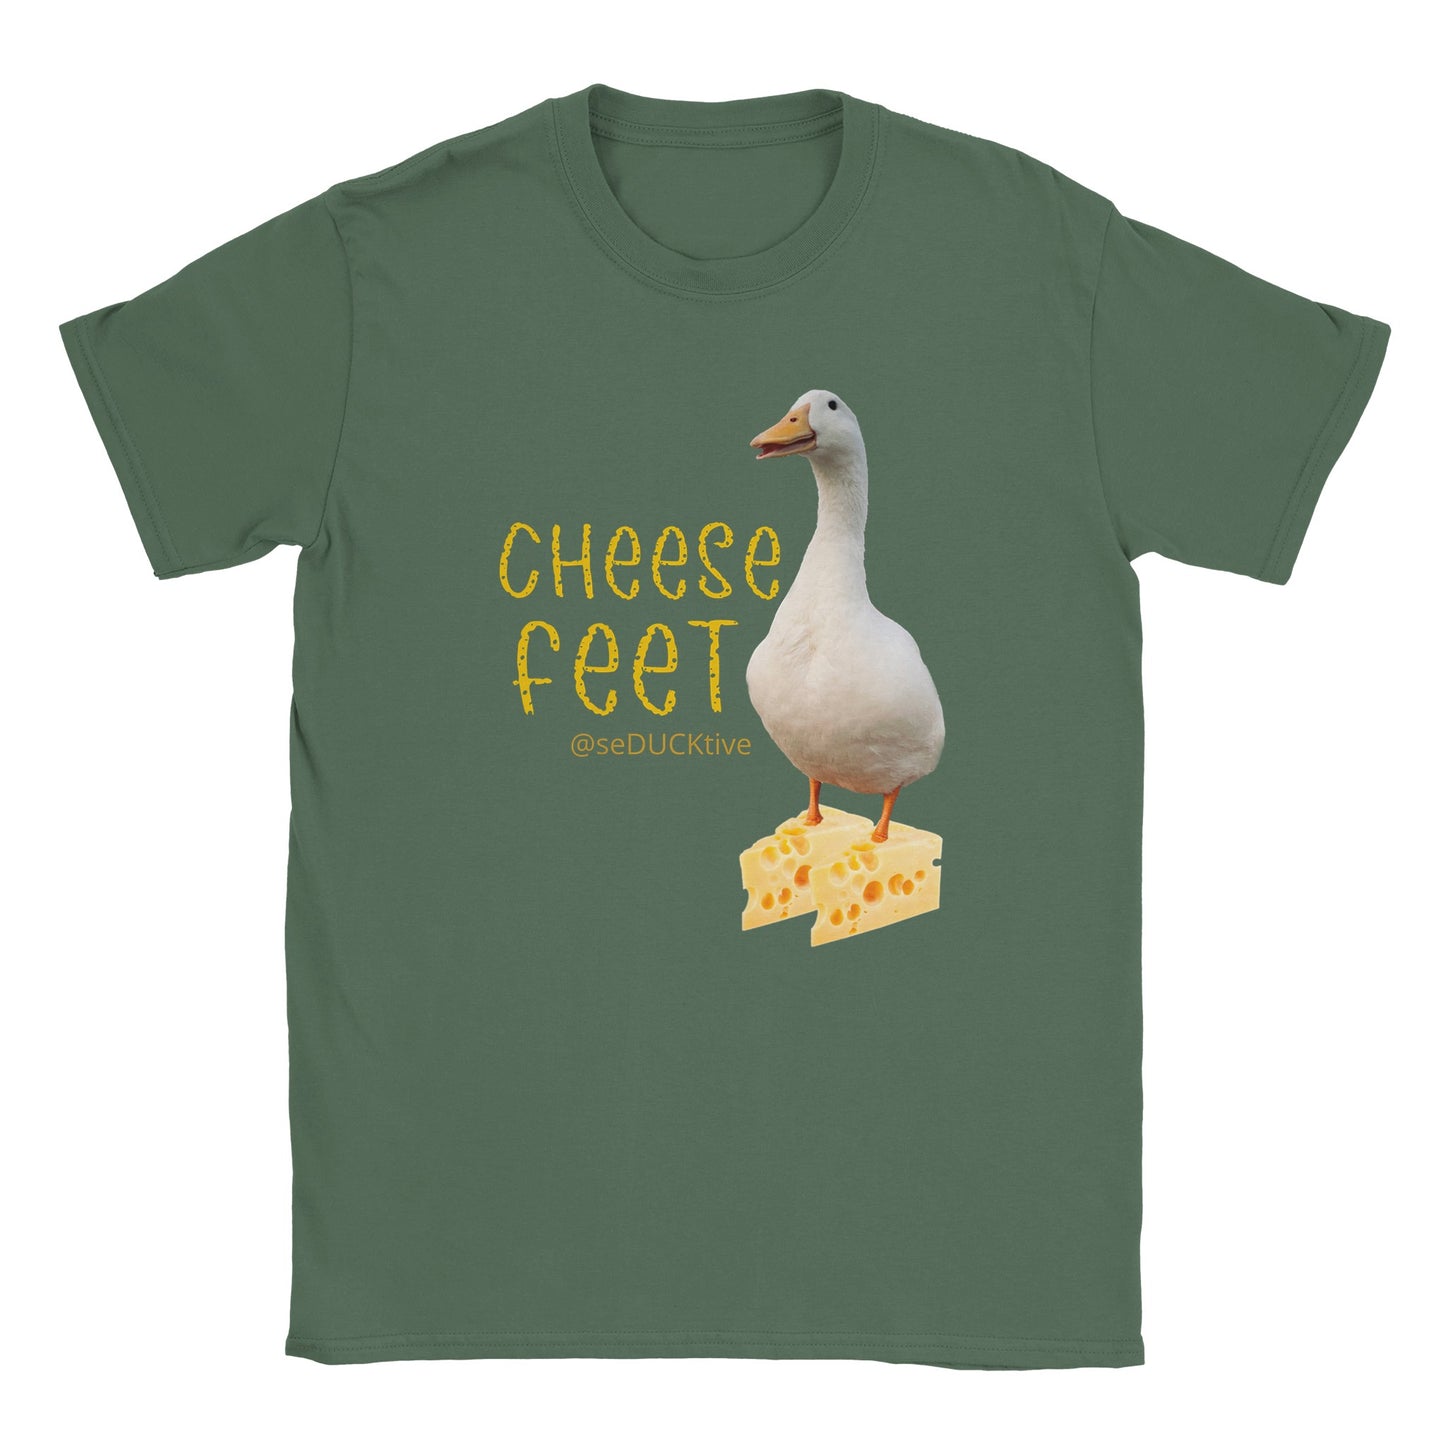 Cheese Feet T Shirt - swiss cheese